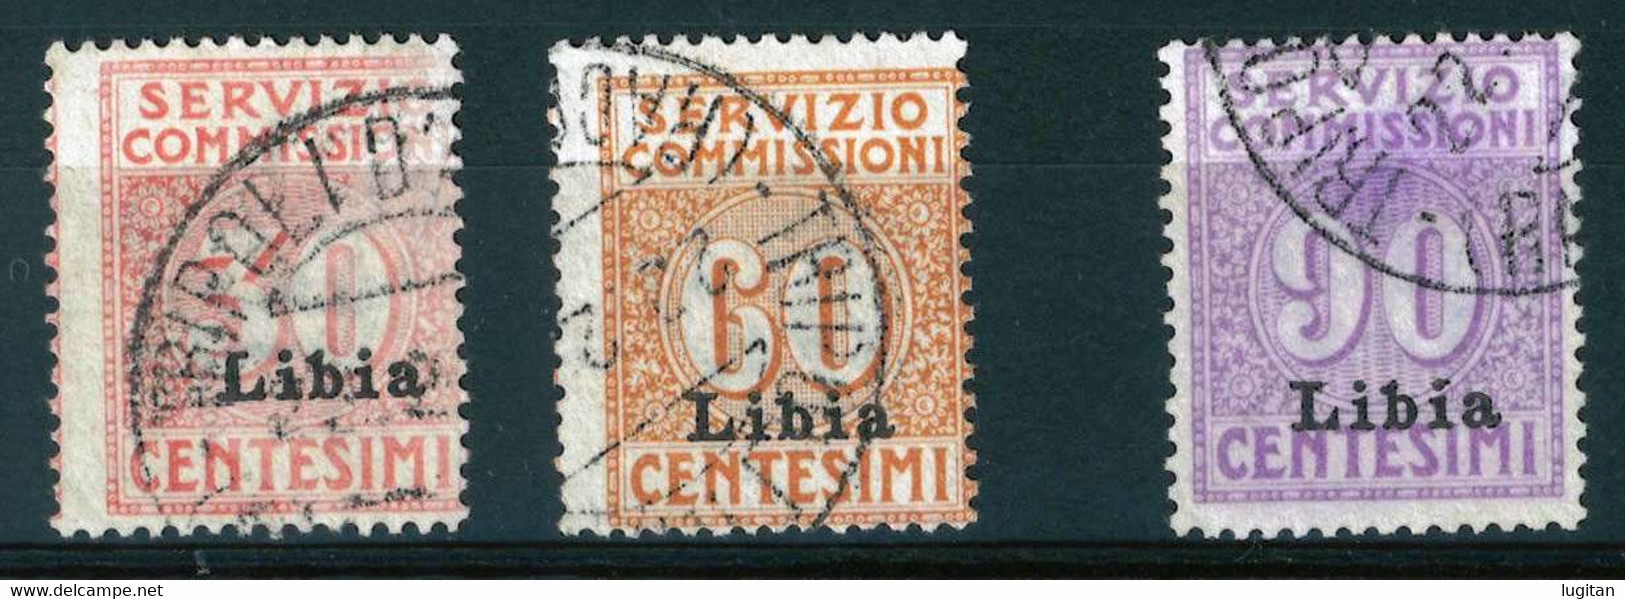 LIBIA - COLONIE ITALIANE - ANNO 1915 - SERVIZIO COMMISSIONI SASS. 1/3 - RARA - USATA - Libya